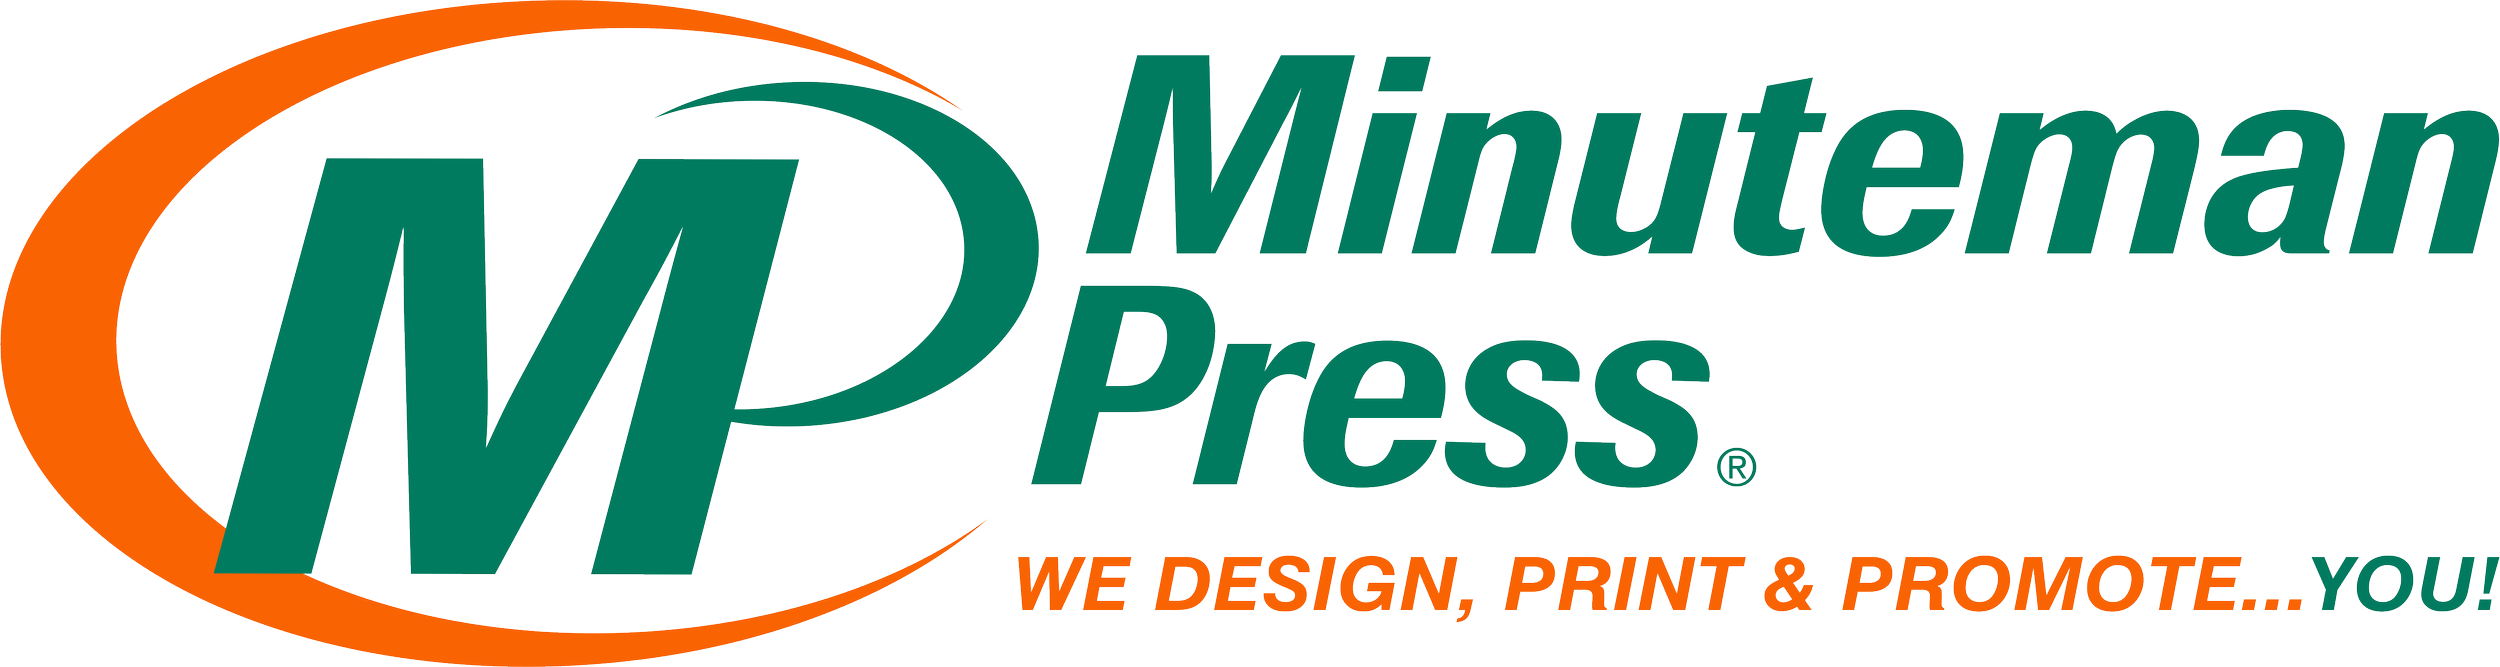 MinutemanPress_Logo.png